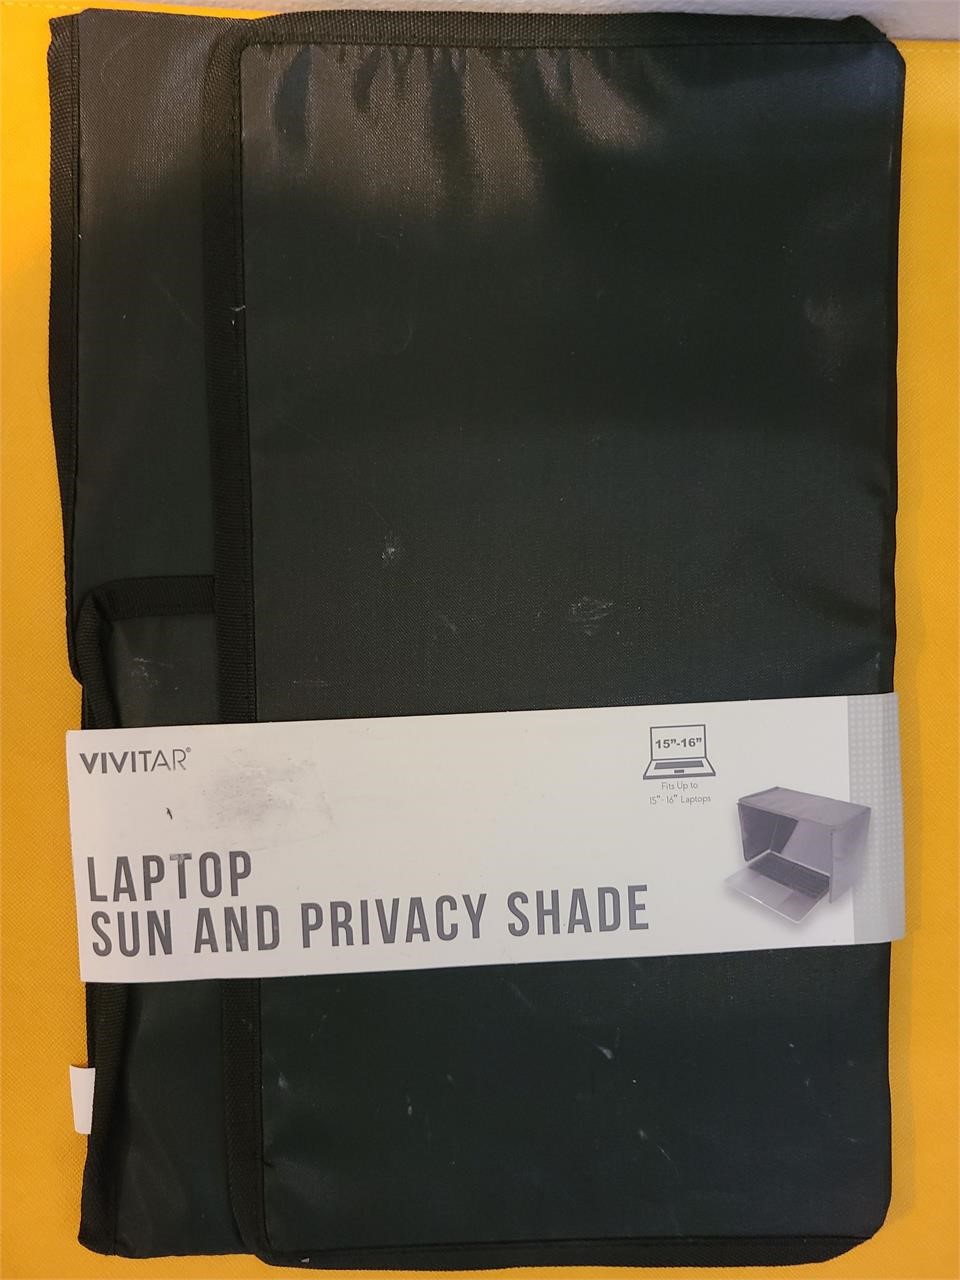 Vivitar laptop sun & privacy shade